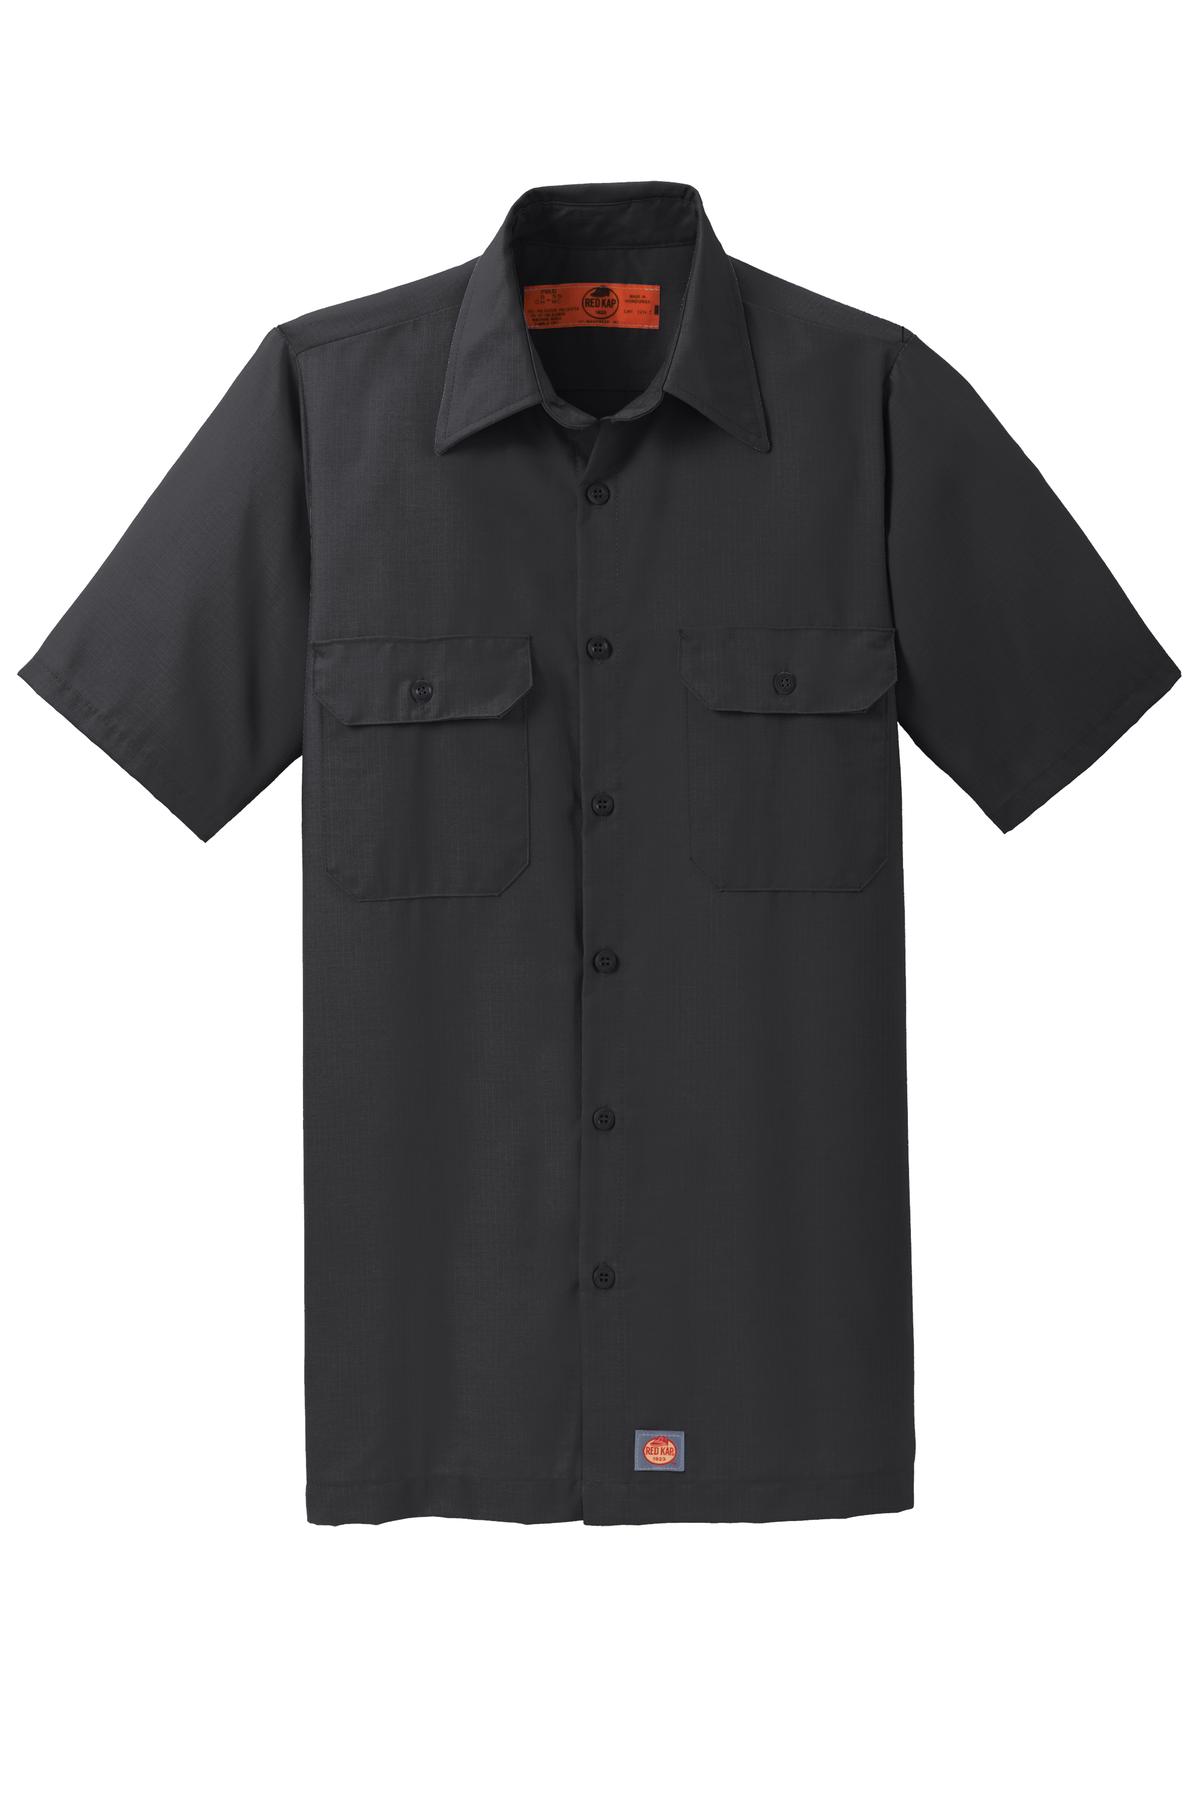 Red Kap ® Short Sleeve Solid Ripstop Shirt. SY60 - Custom Shirt Shop